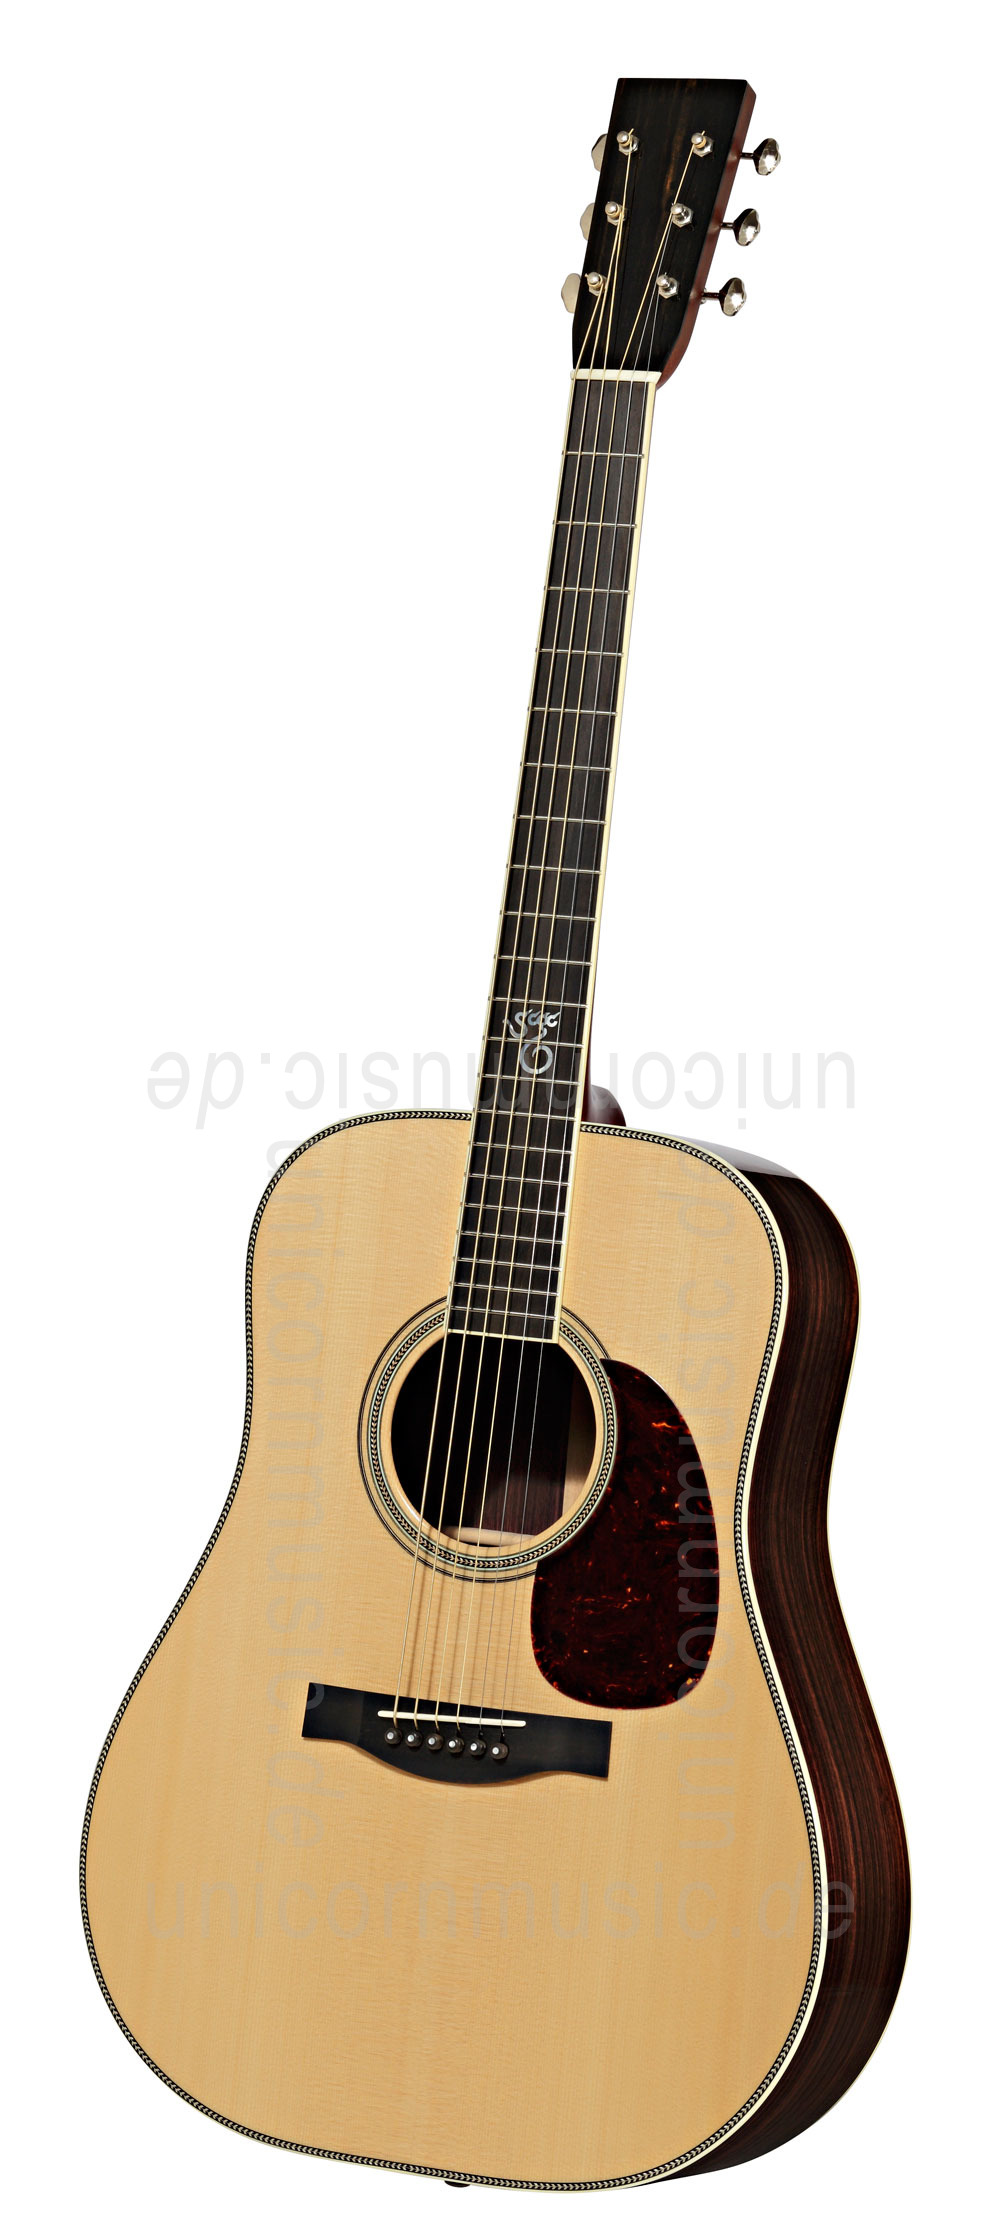 to article description / price Acoustic Guitar SANTA CRUZ Toni Rice (2014) - Dreadnought Model - Engelmann spruce top - all solid + hardcase